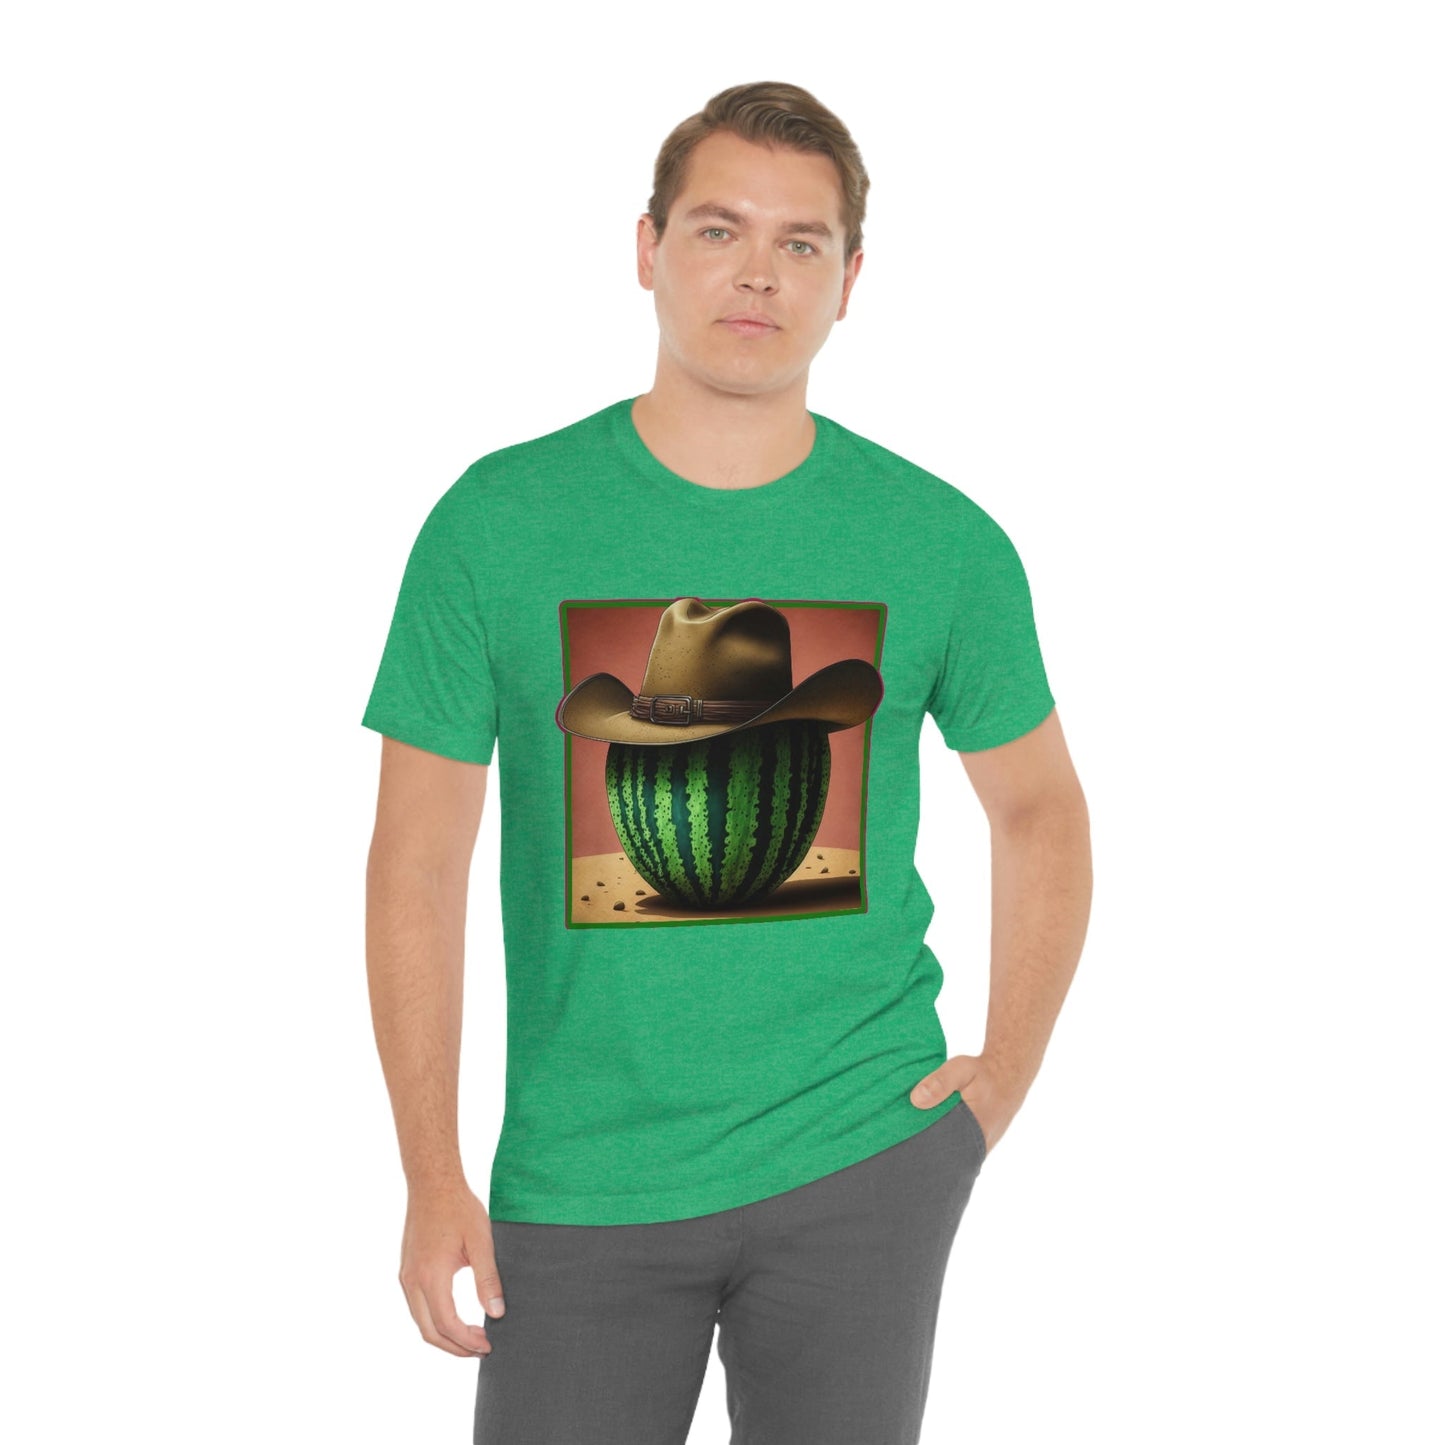 Cowboy Watermelon Tee - The Boss - Bind on Equip - 24111082358612793289